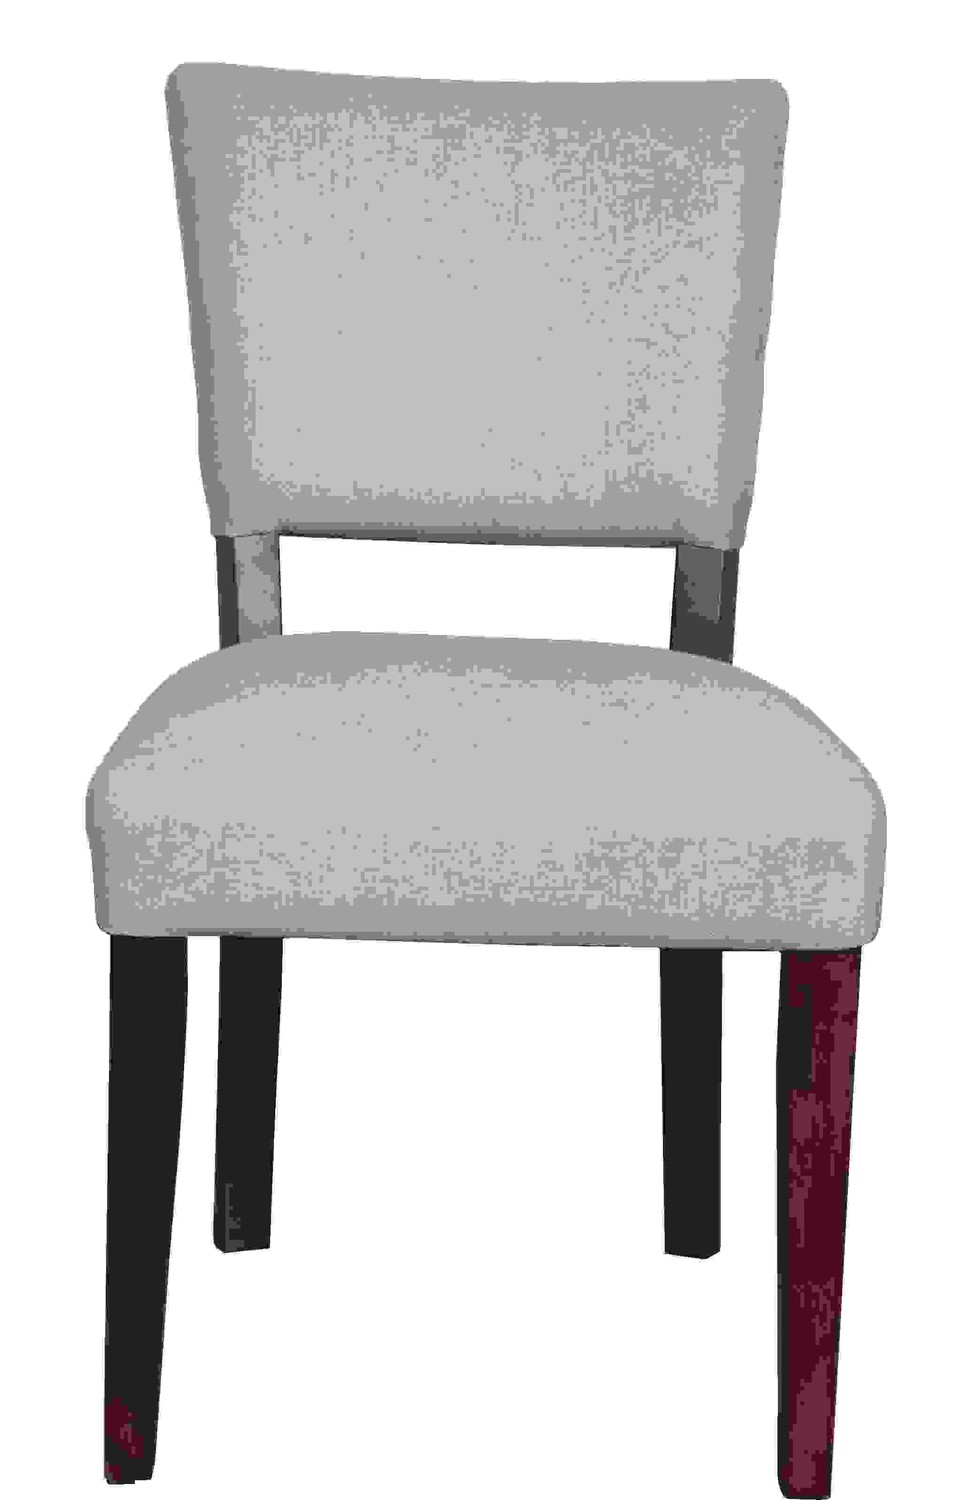 19.5" X 20.75" X 36.4" Brown Chair